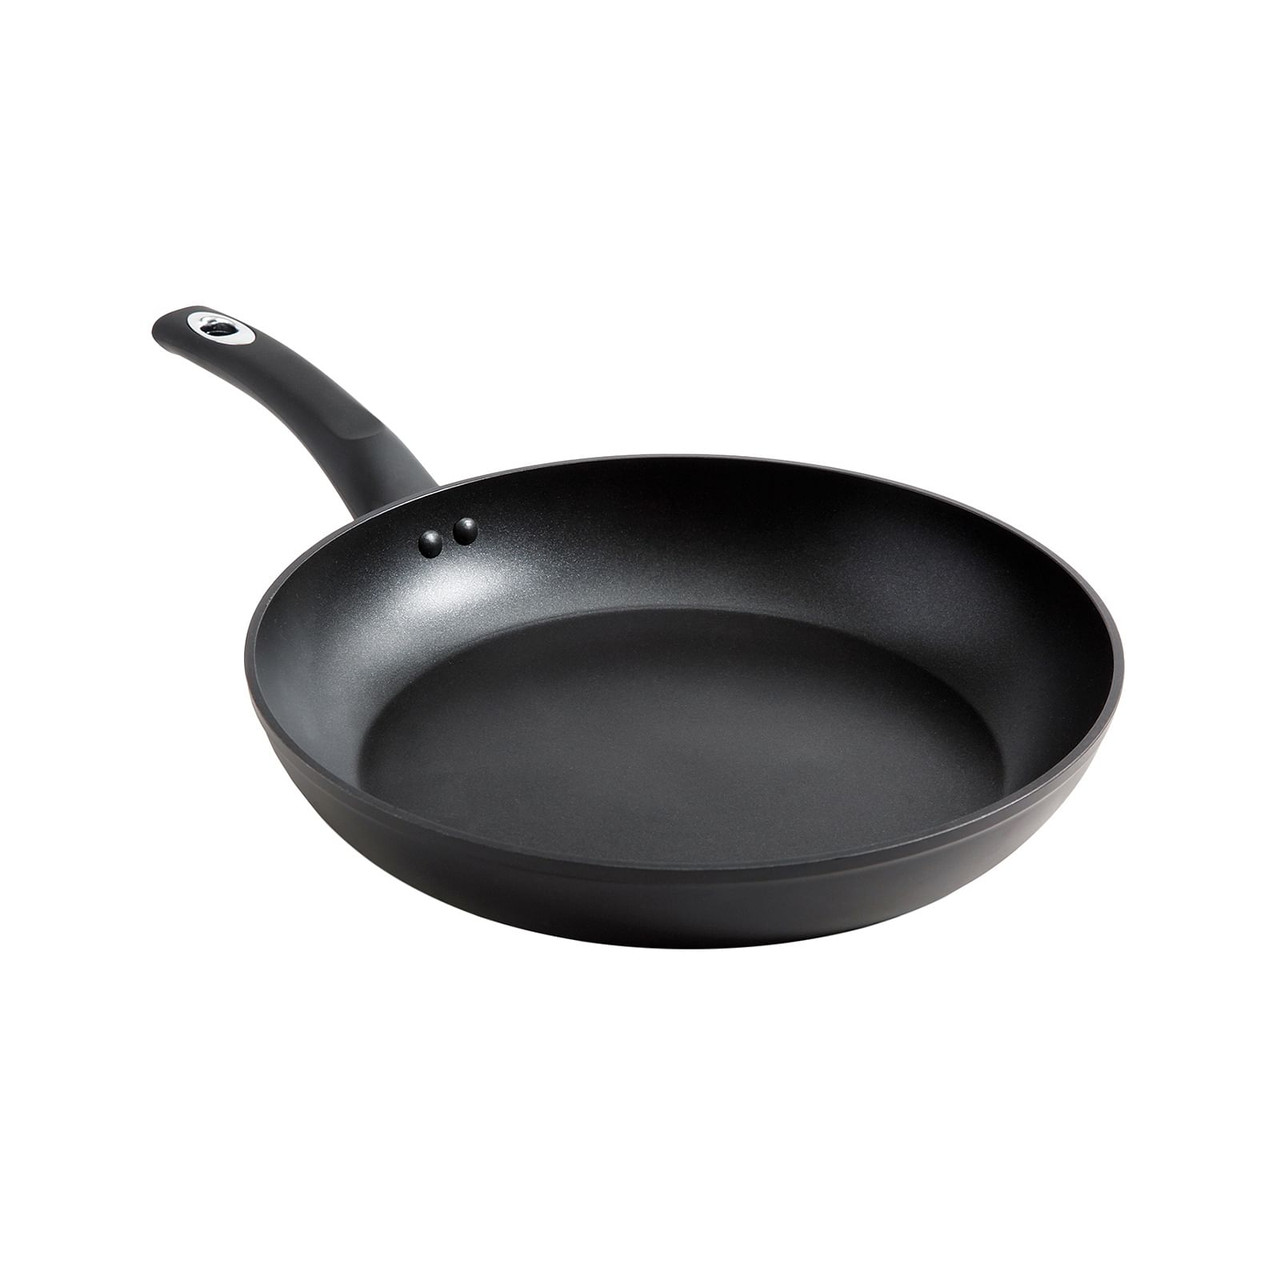 Oster Cuisine Allston 8 in. Frying Pan in Black